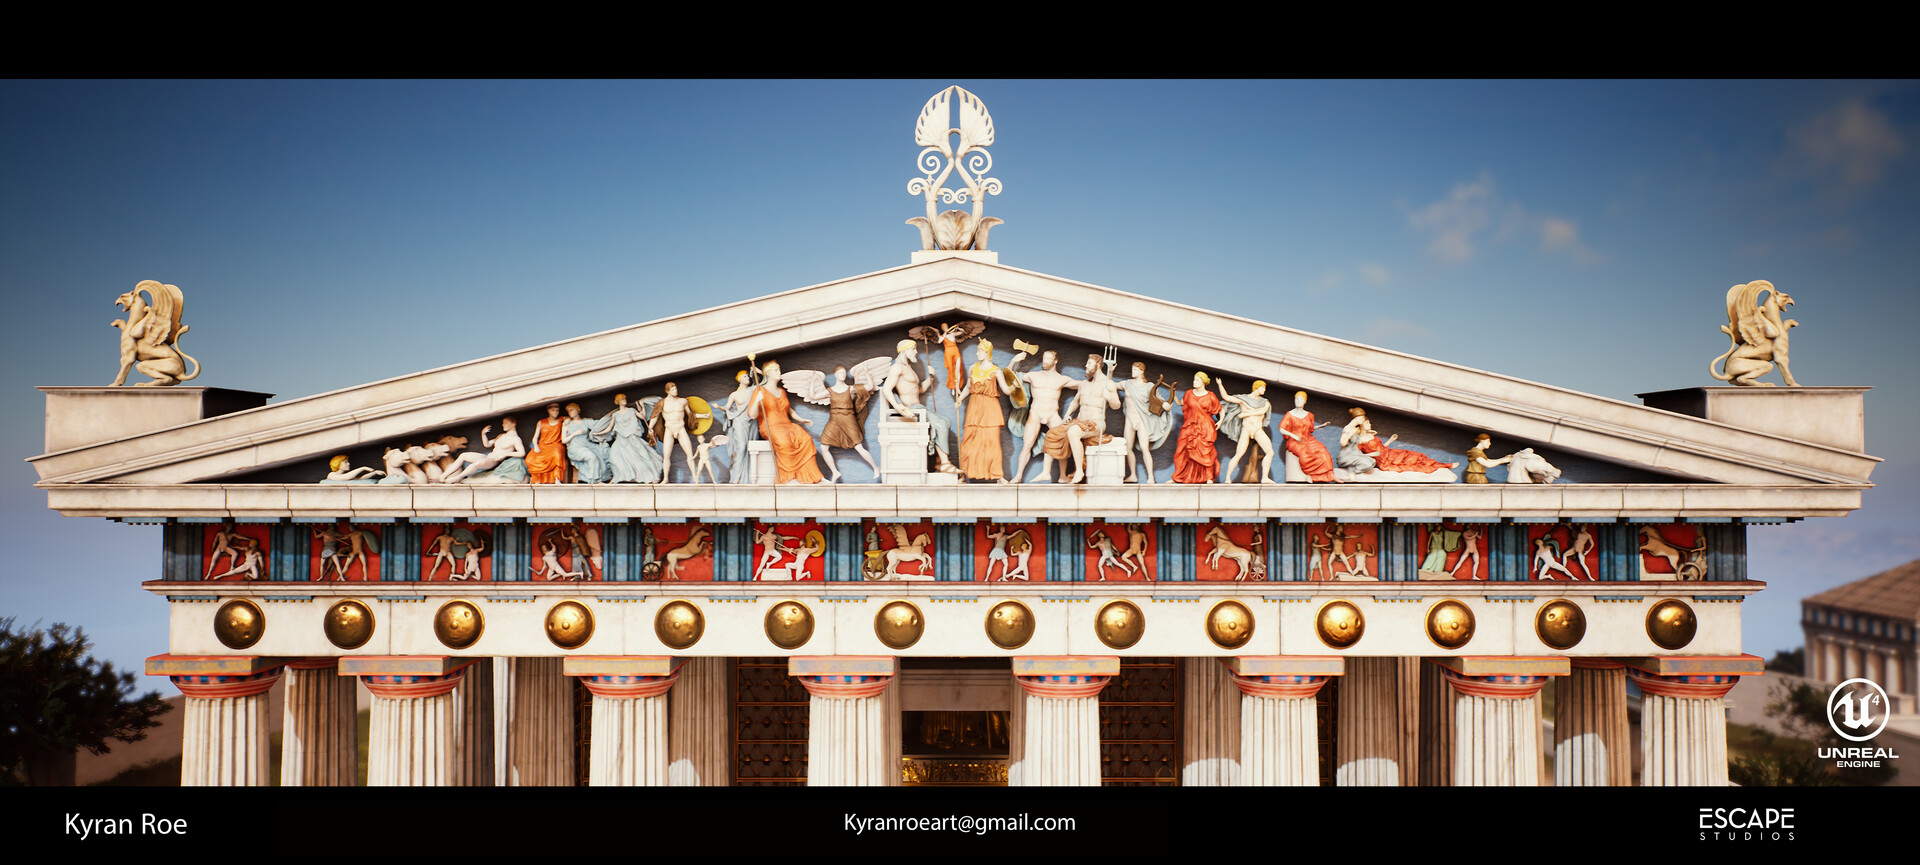 Kyran Roe - The Acropolis